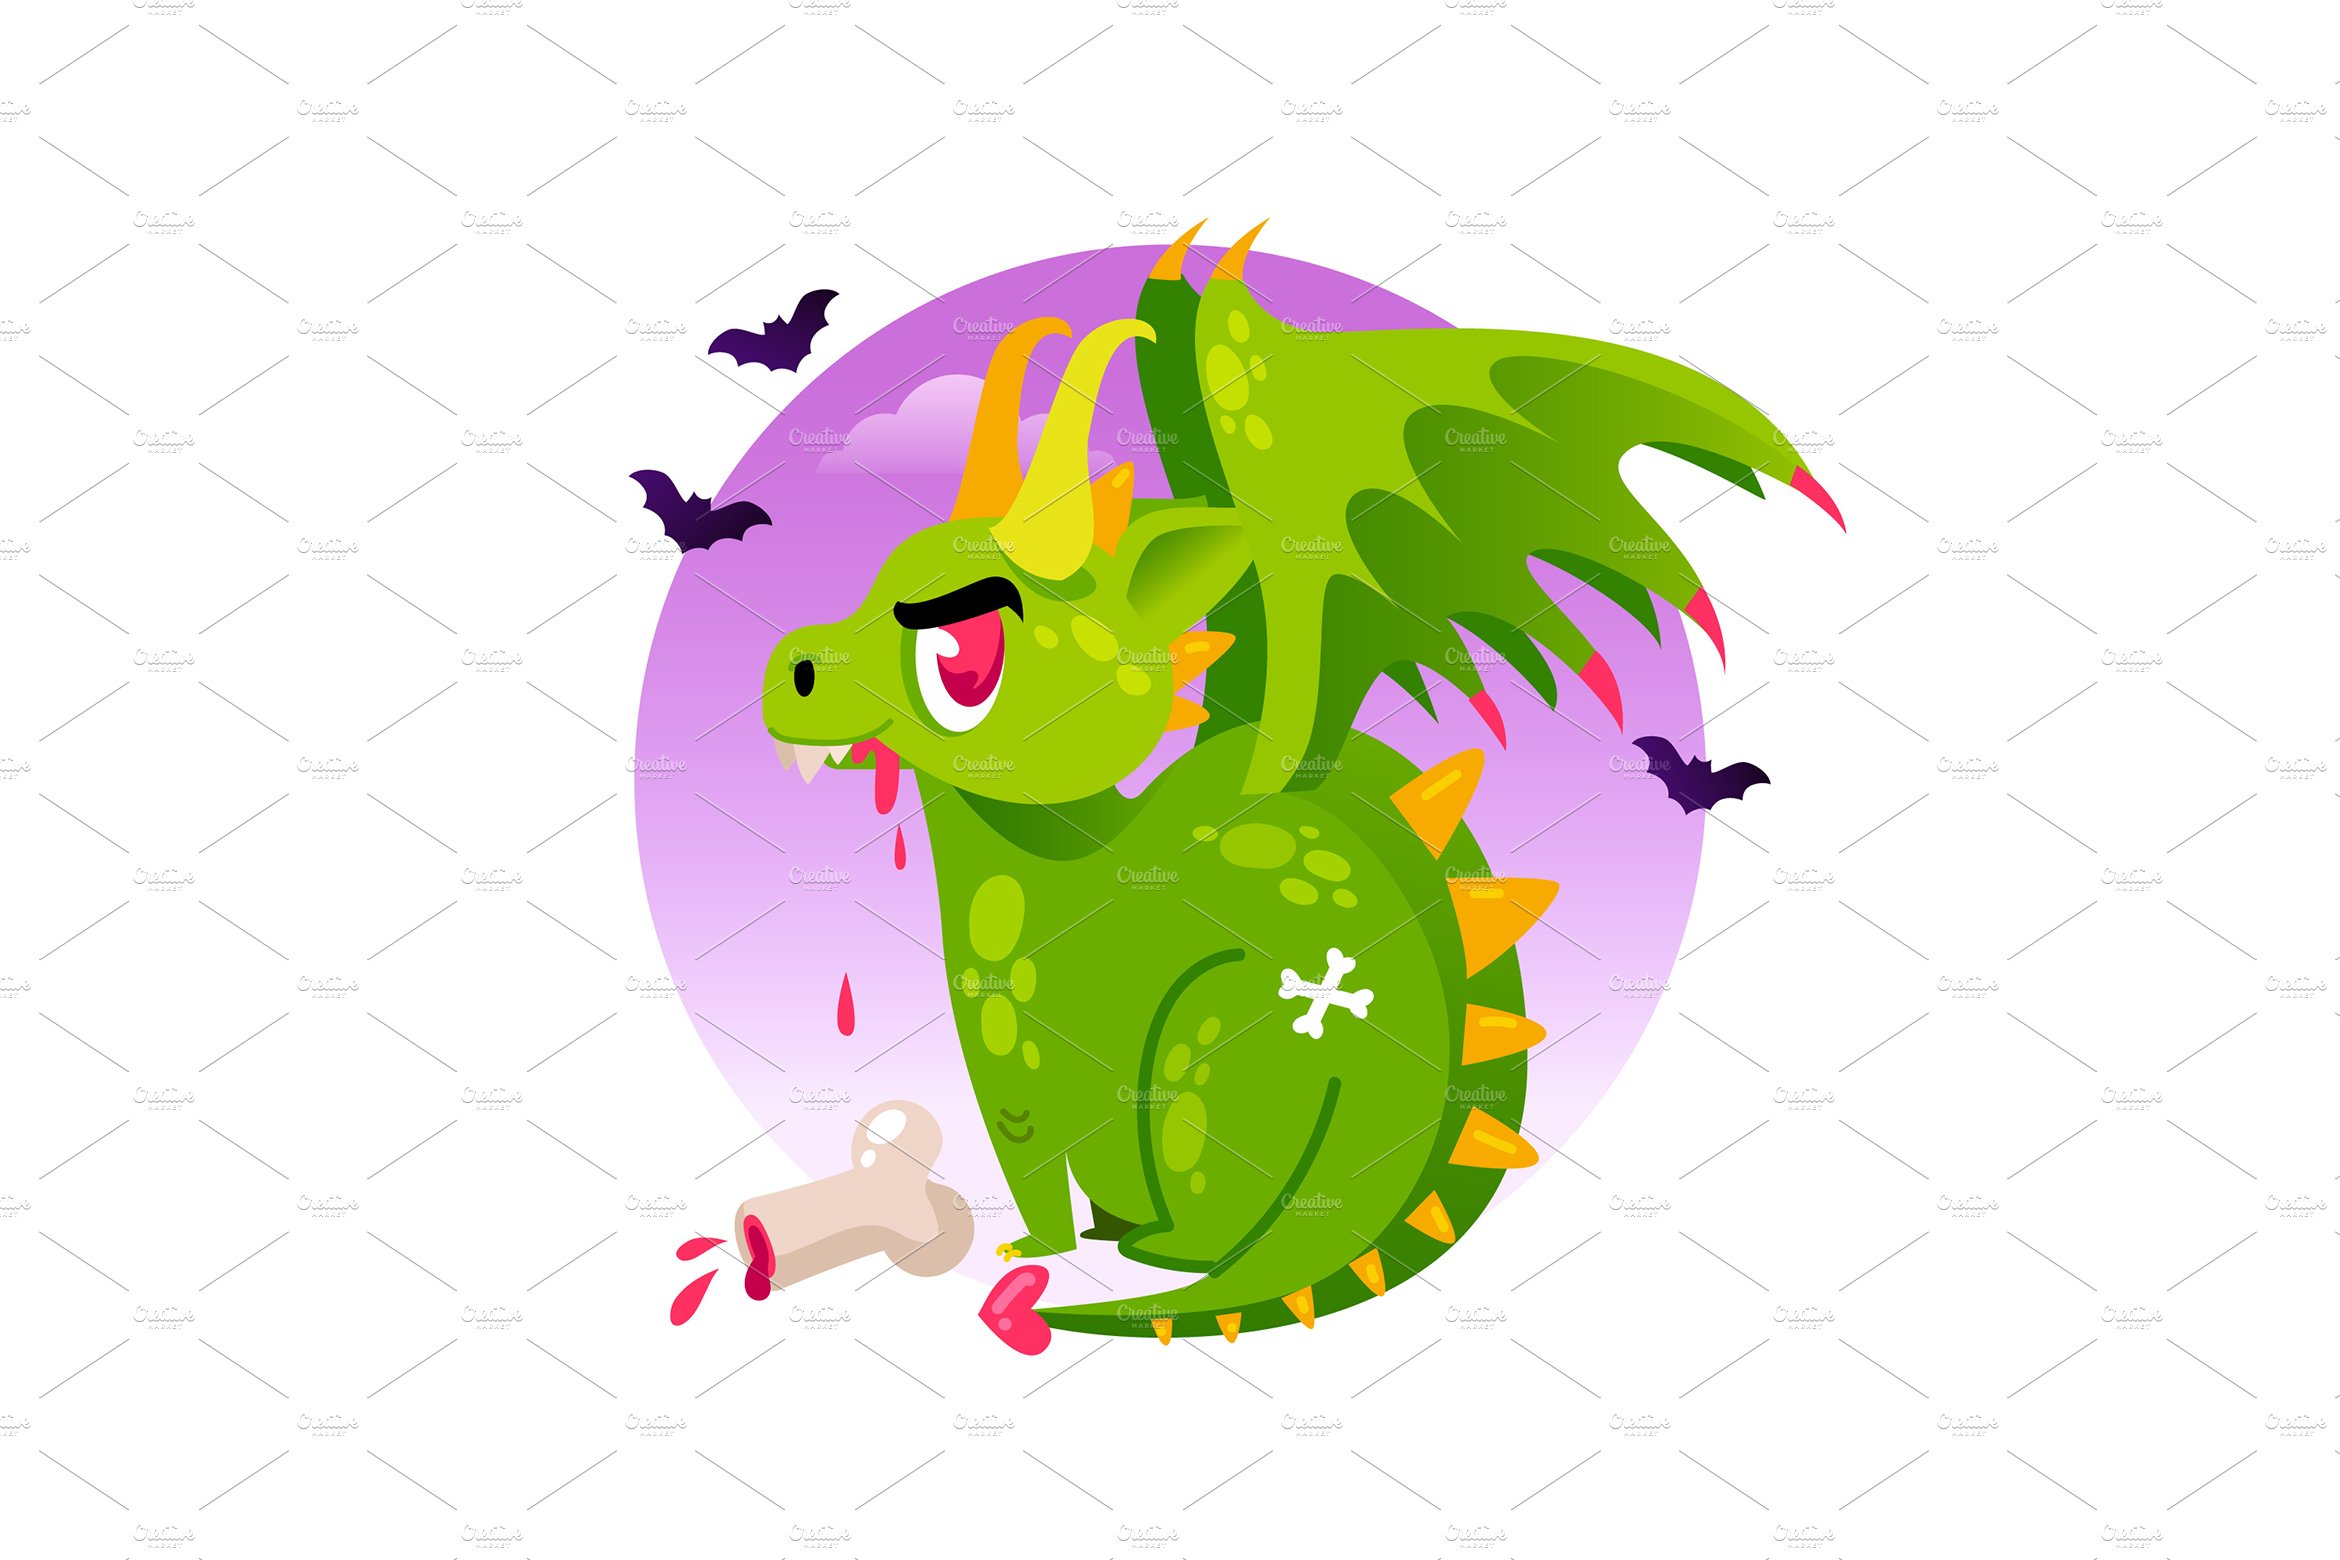 Cartoon Dragon cover image.